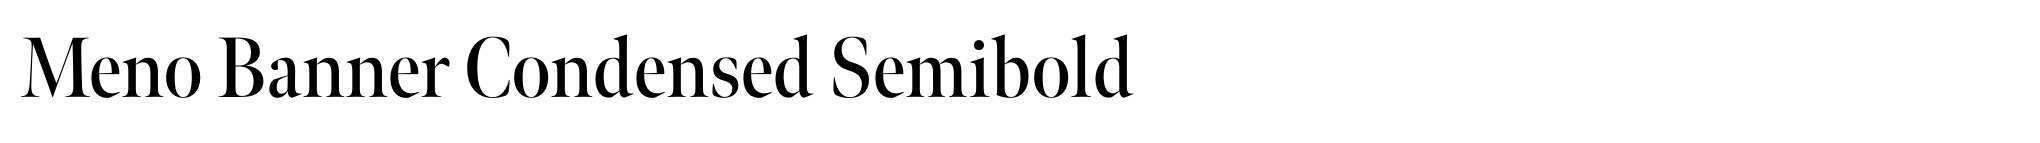 Meno Banner Condensed Semibold image